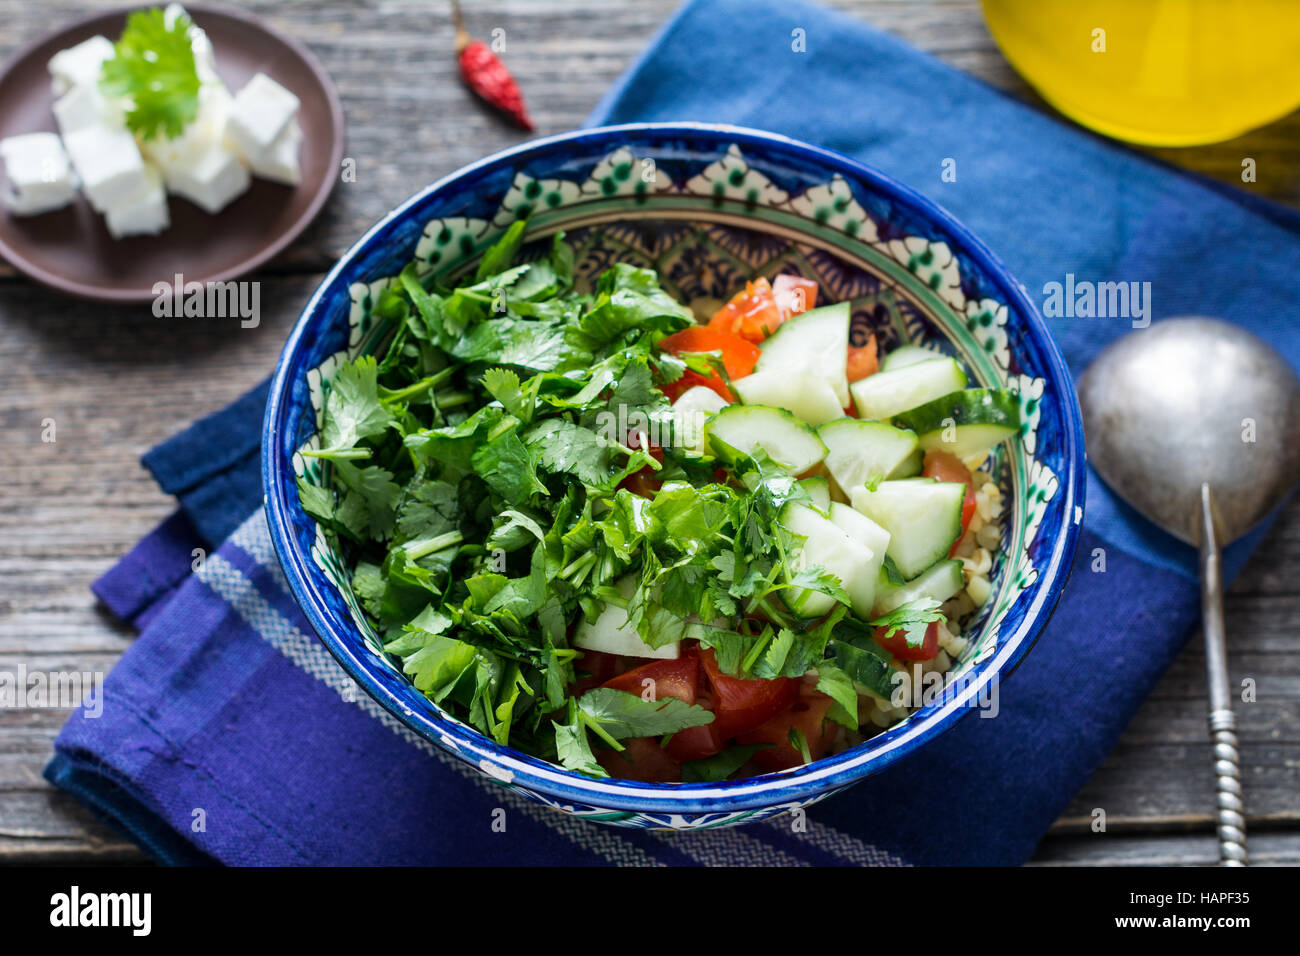 Cottura sana insalata con prezzemolo e verdure fresche. Vista ravvicinata Foto Stock